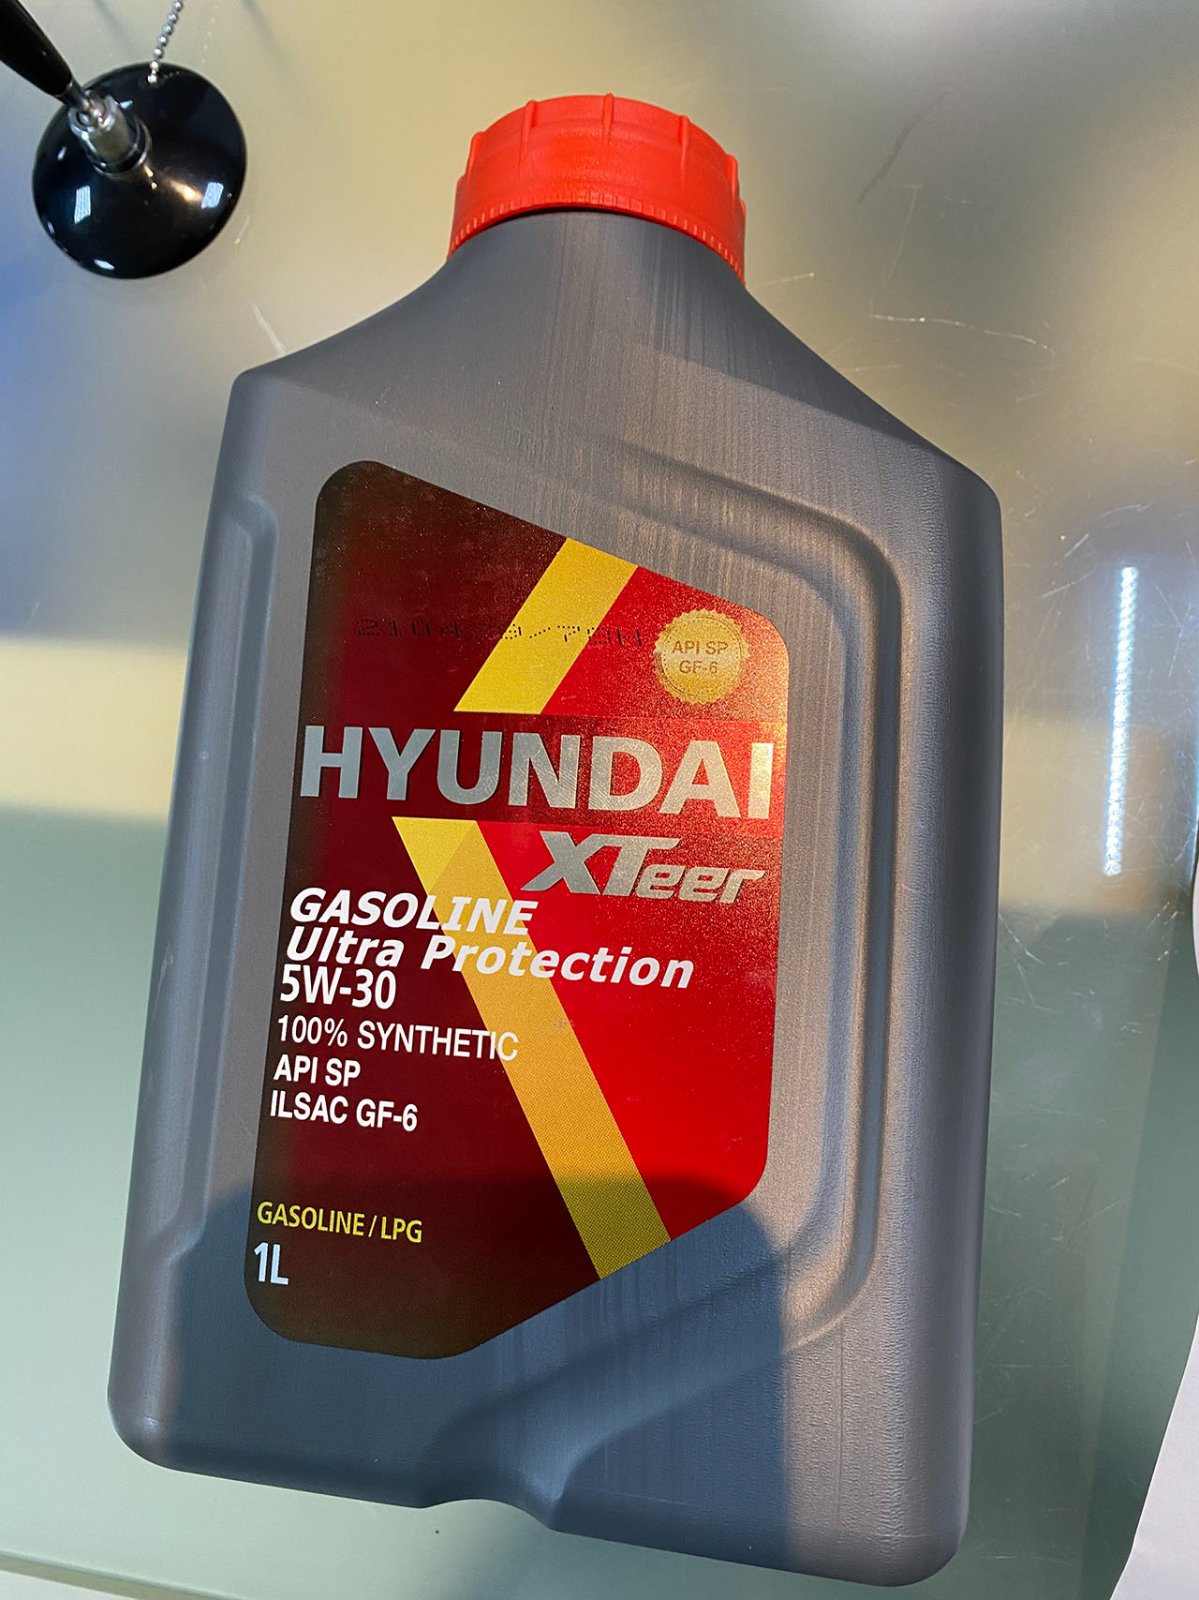 Hyundai Xteer Gasoline Ultra Protection 5W-30 API SP свежее .